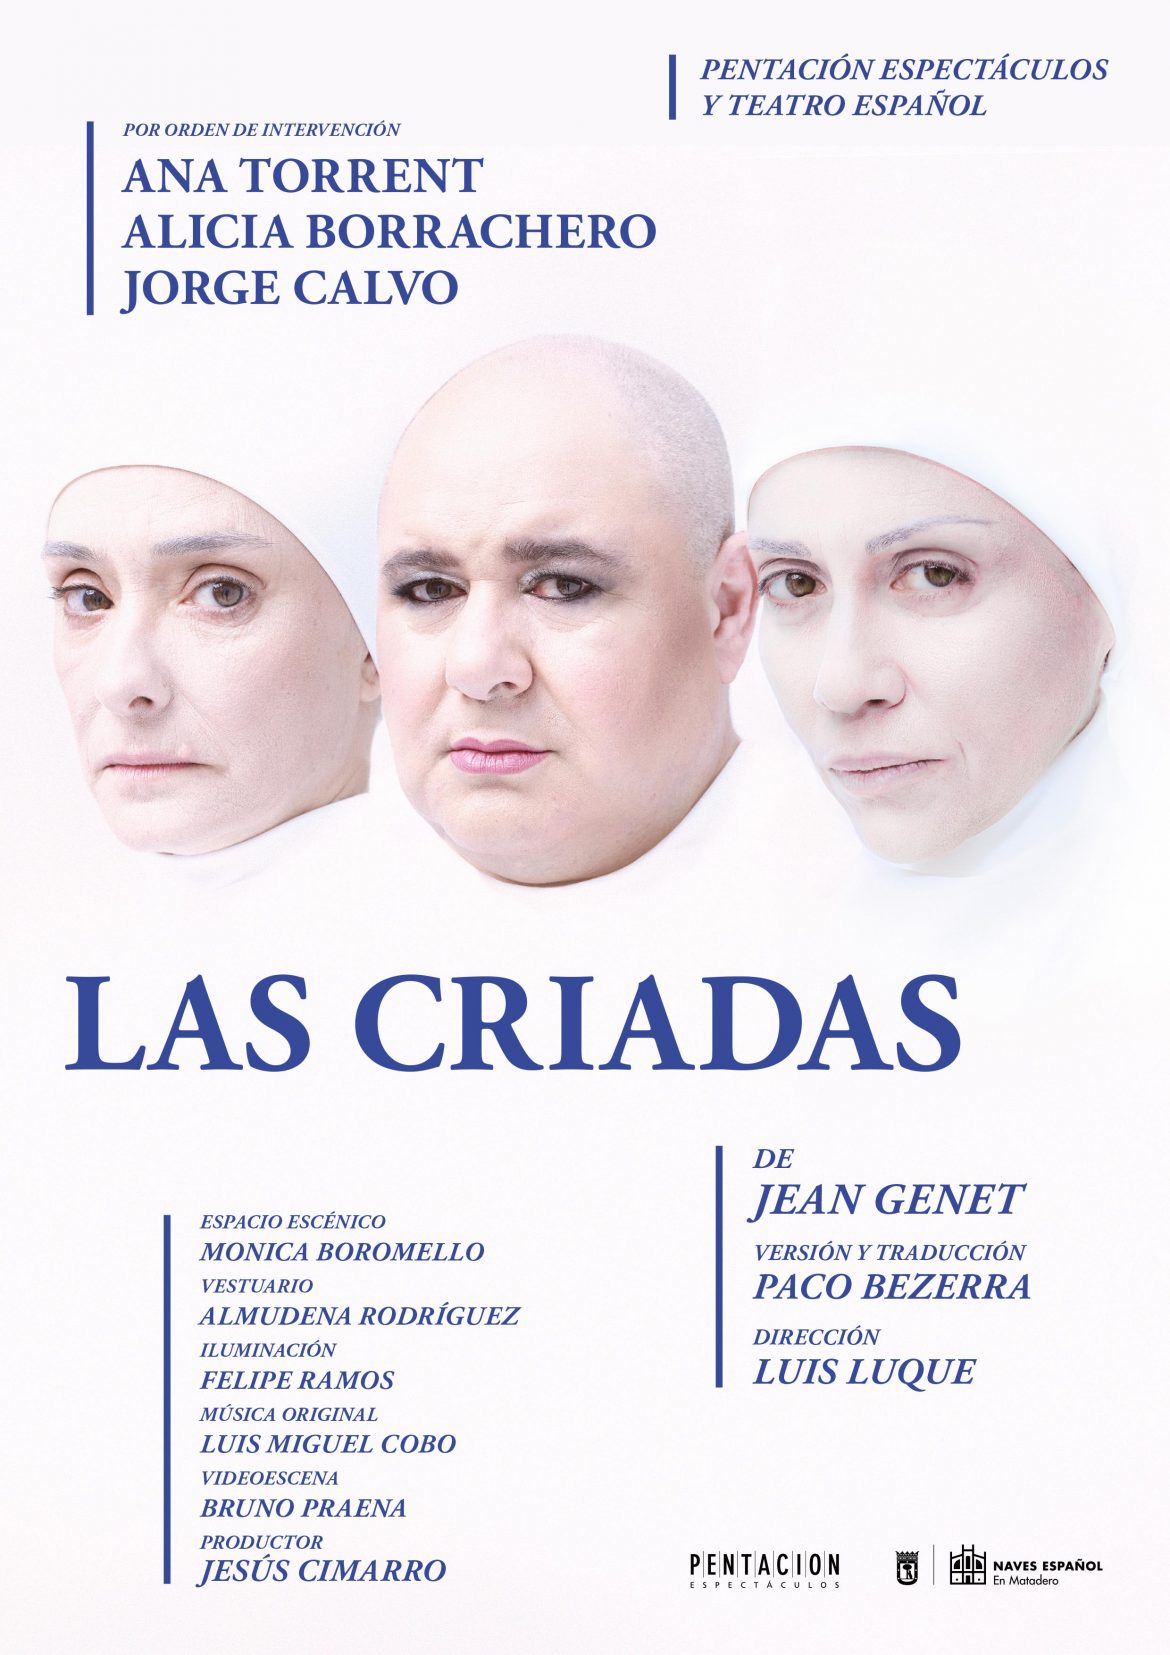 Ana Torrent, Alicia Borrachero y Jorge Calvo protagonizan “Las Criadas” de Jean Benet